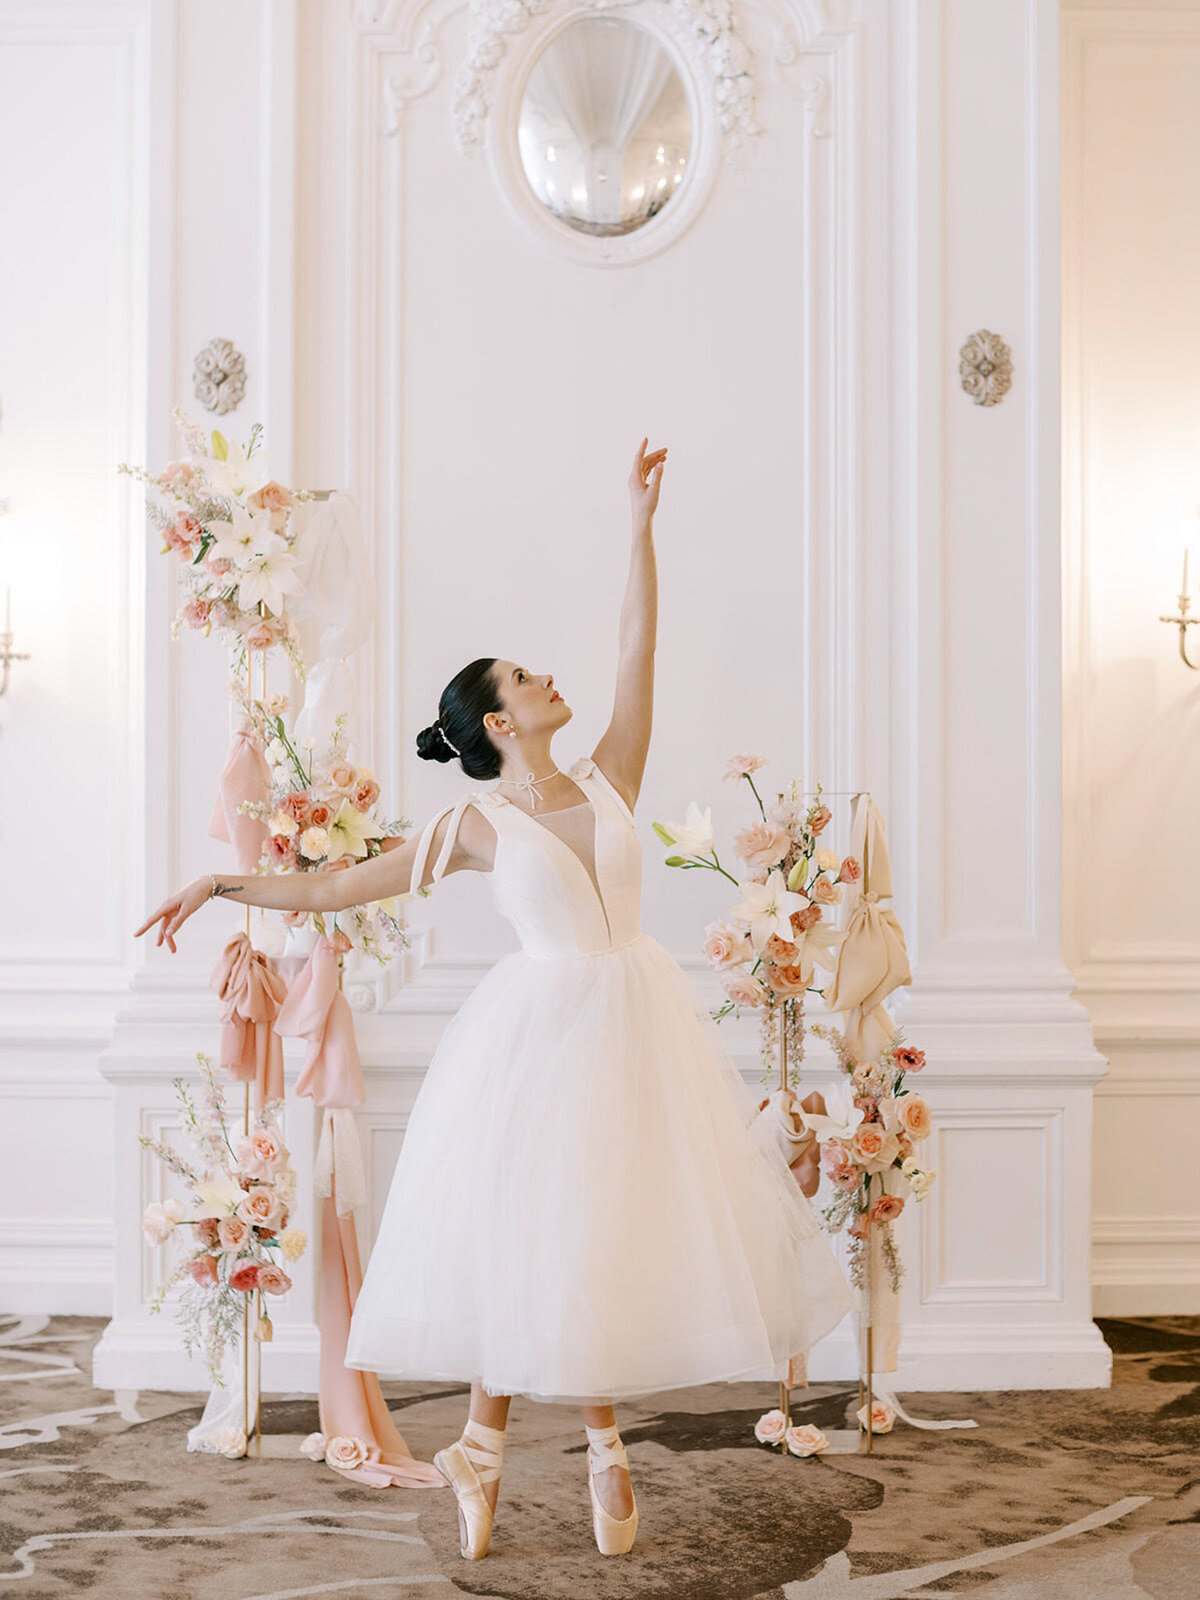 Ballerina inspired bridal shoot at Fairmont Palliser, captured by Justine Milton